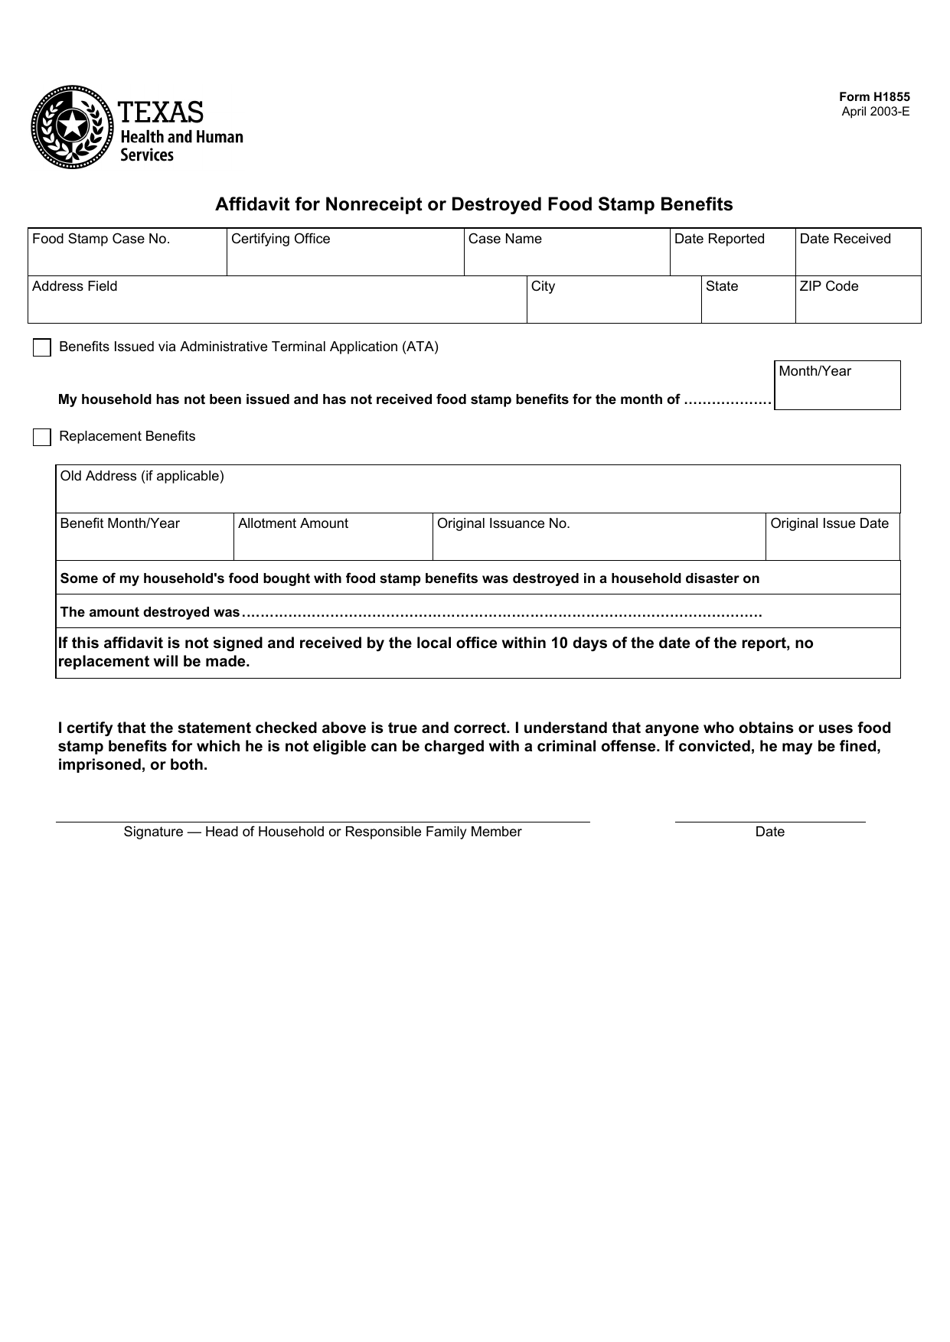 Form H1855 Affidavit for Nonreceipt or Destroyed Food Stamp Benefits - Texas, Page 1